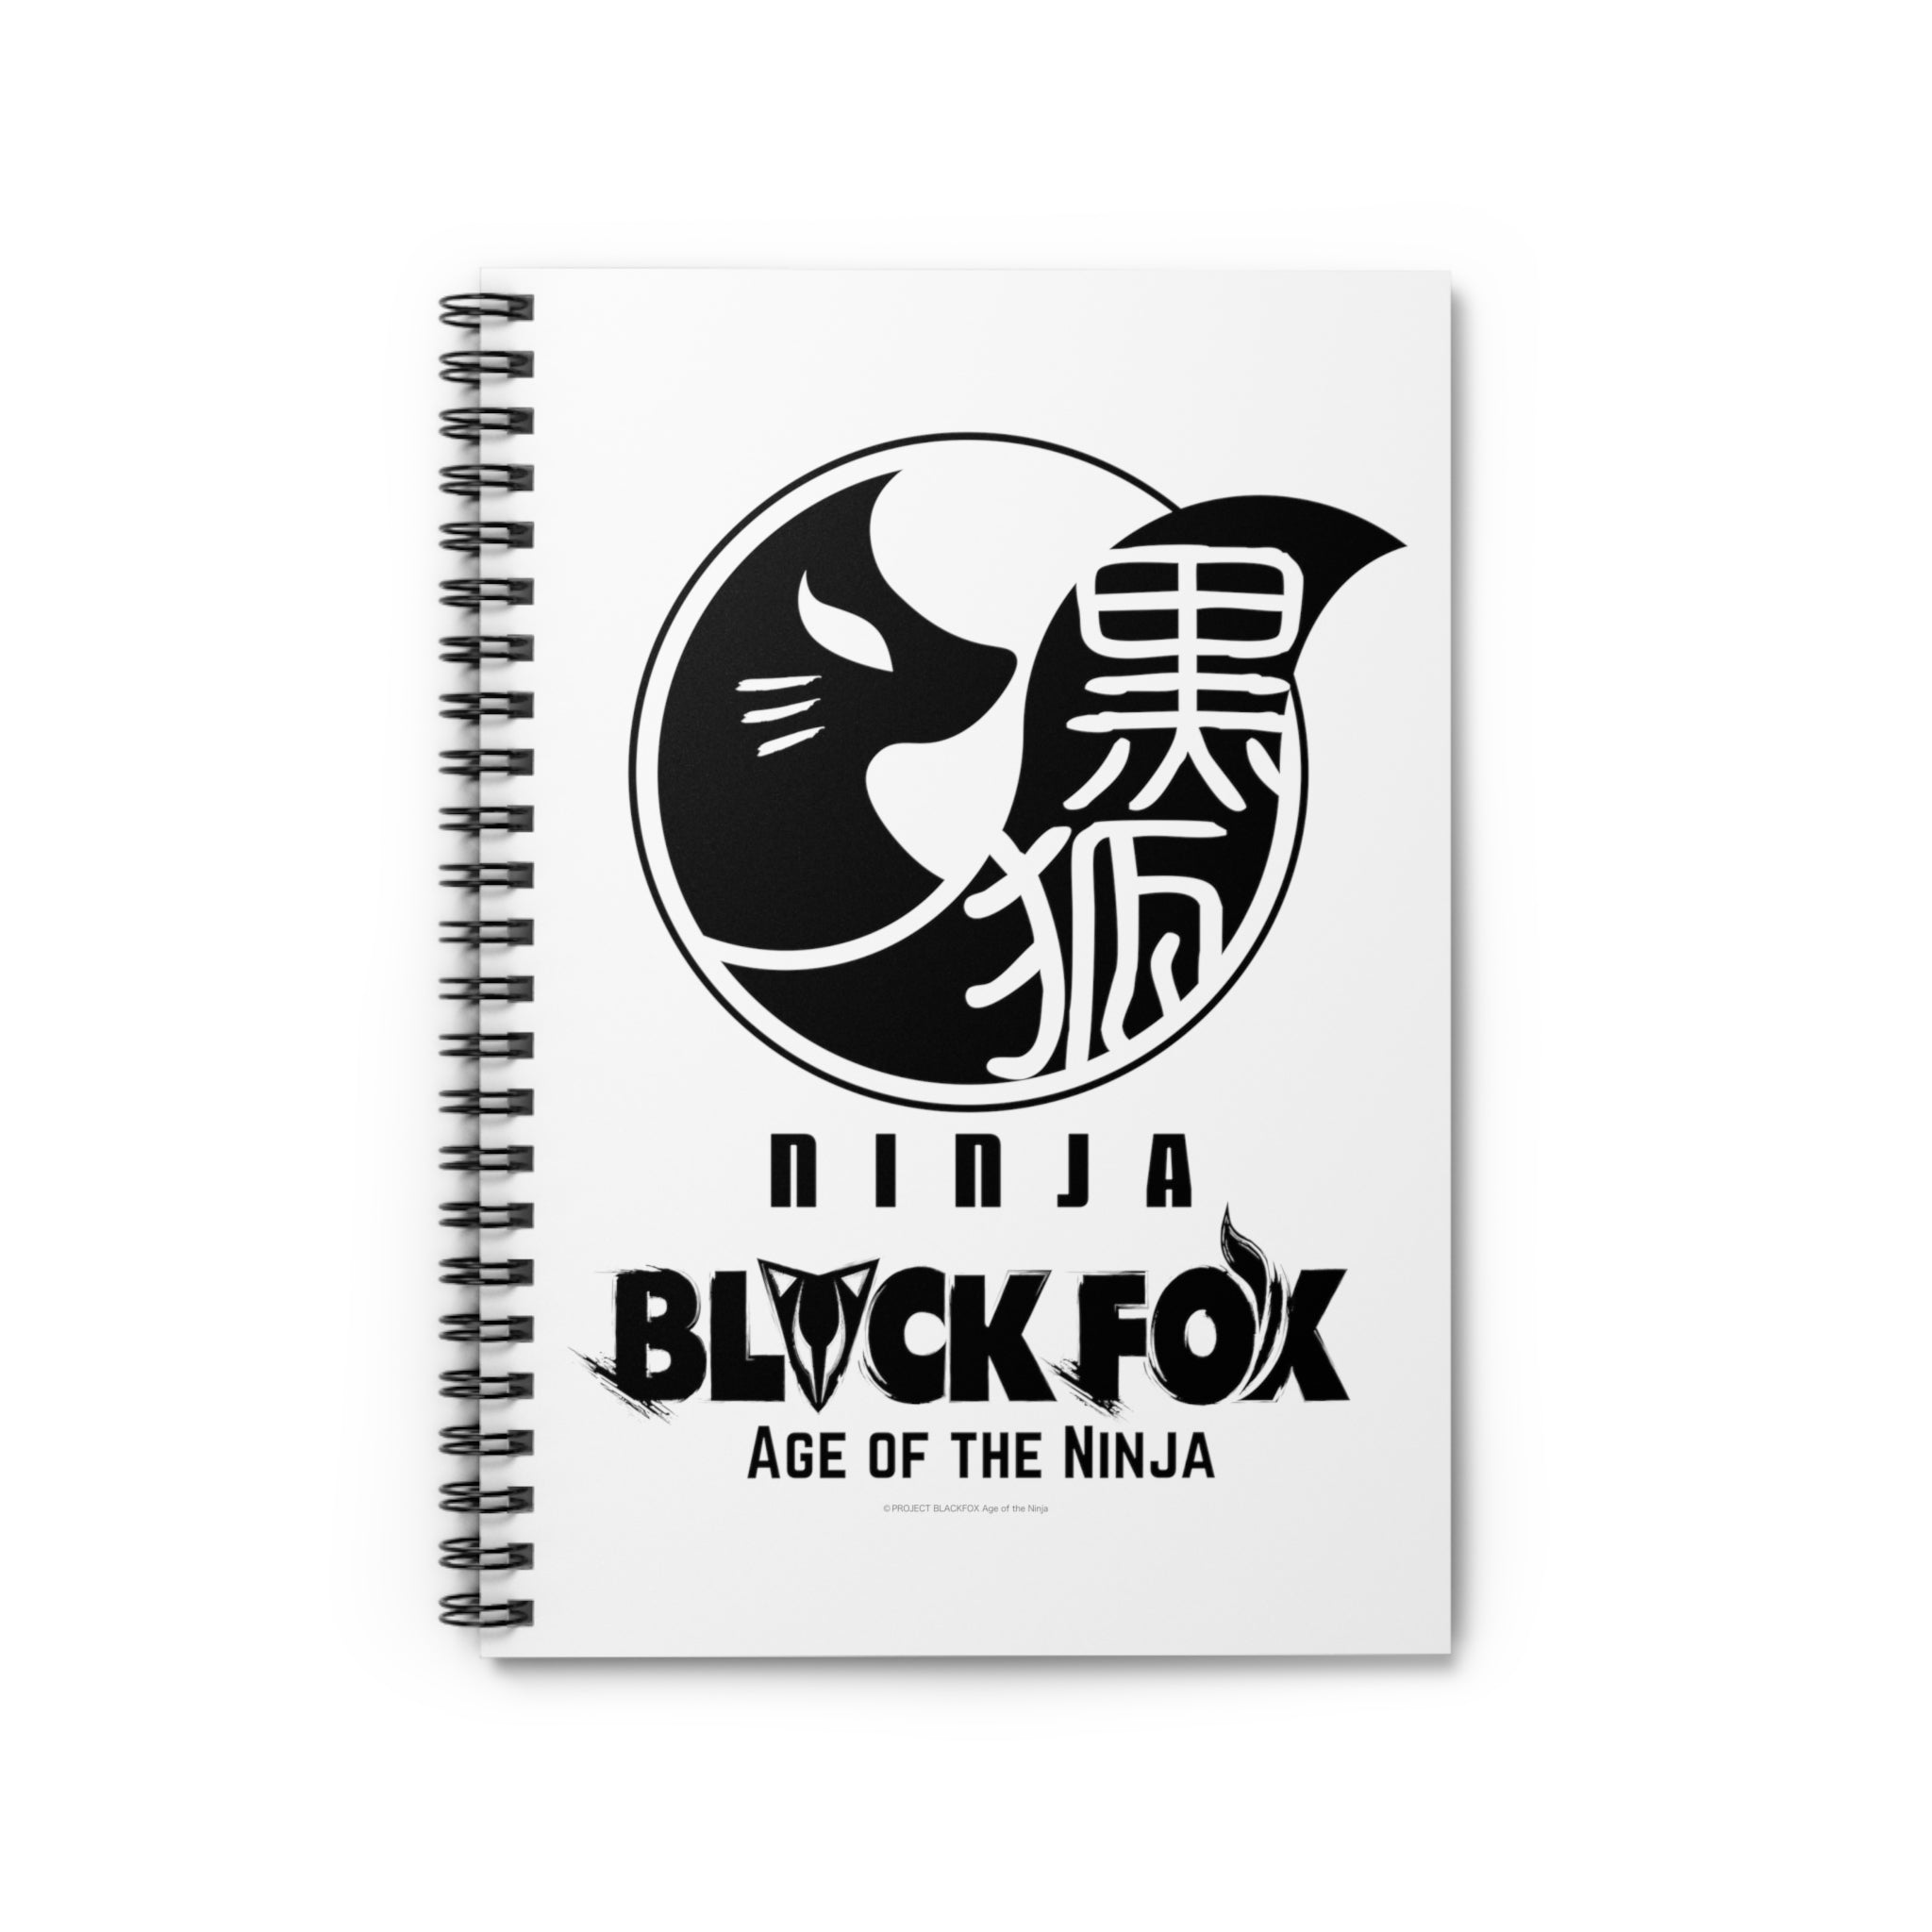 BLACKFOX LOGO Spiral Notebook - Ruled Line (White)